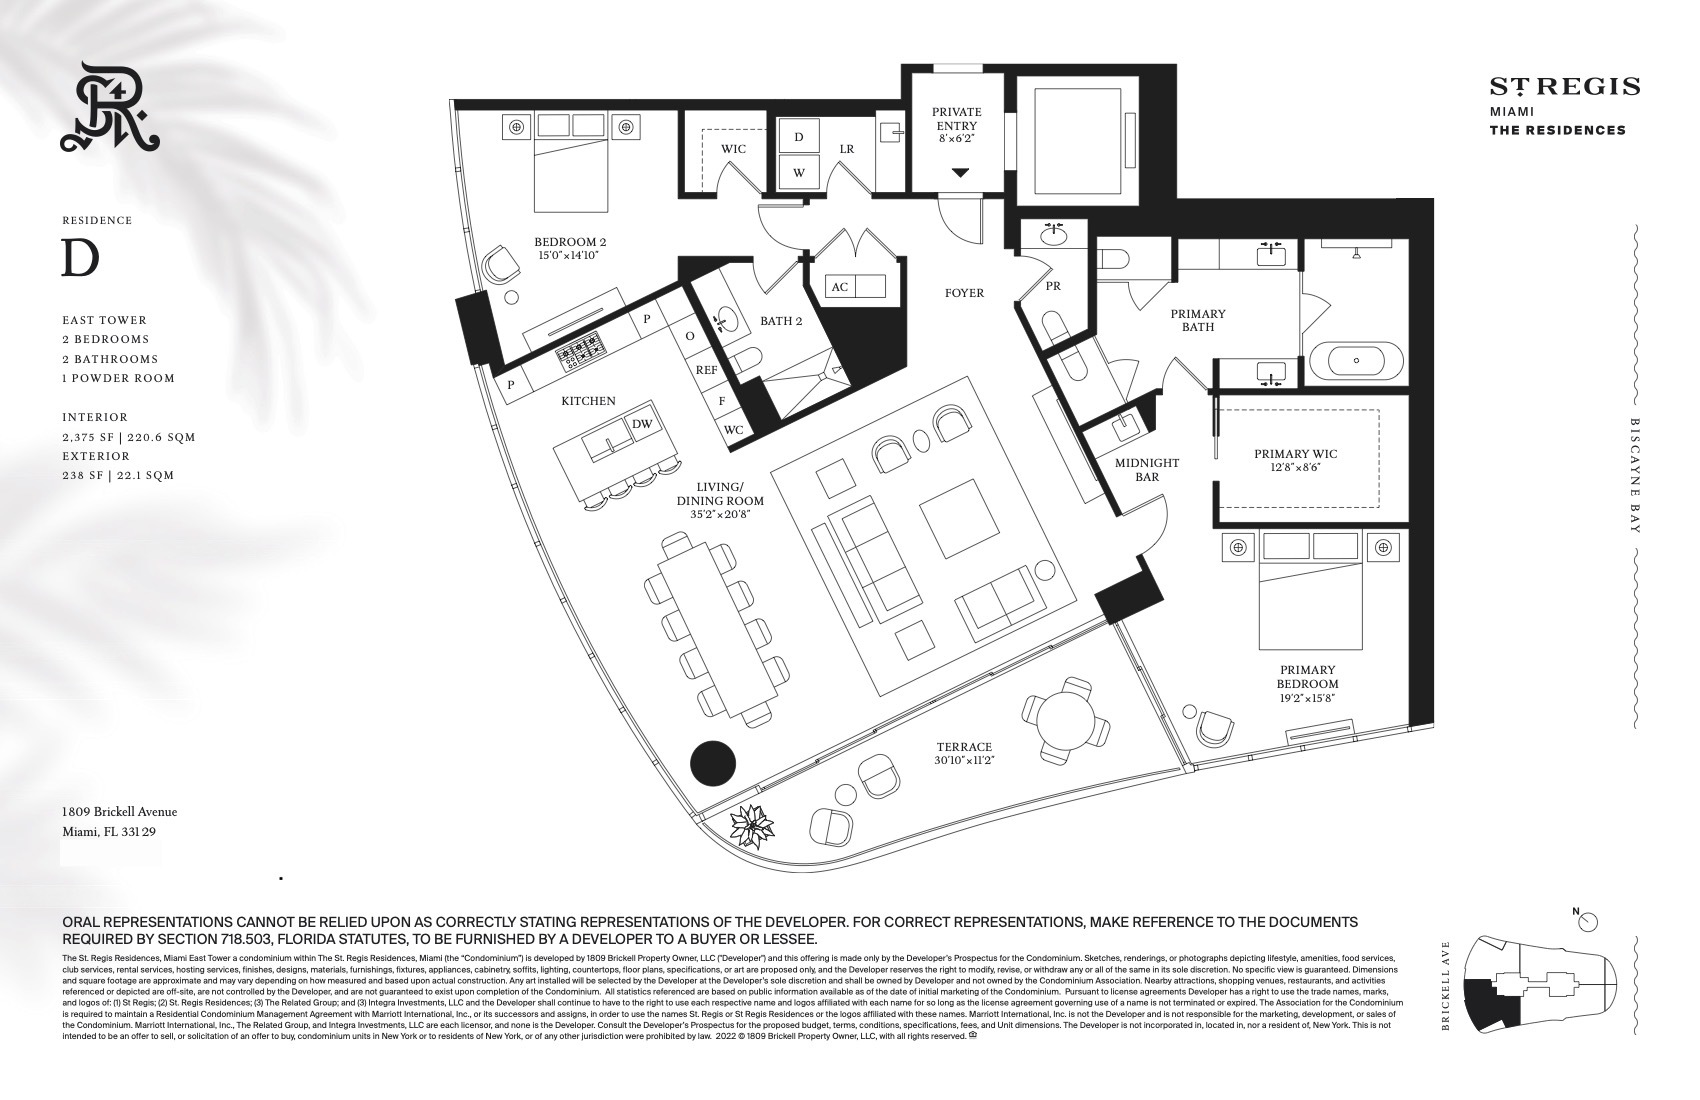 Floor Plan for St. Regis Brickell Floorplans, Residence D